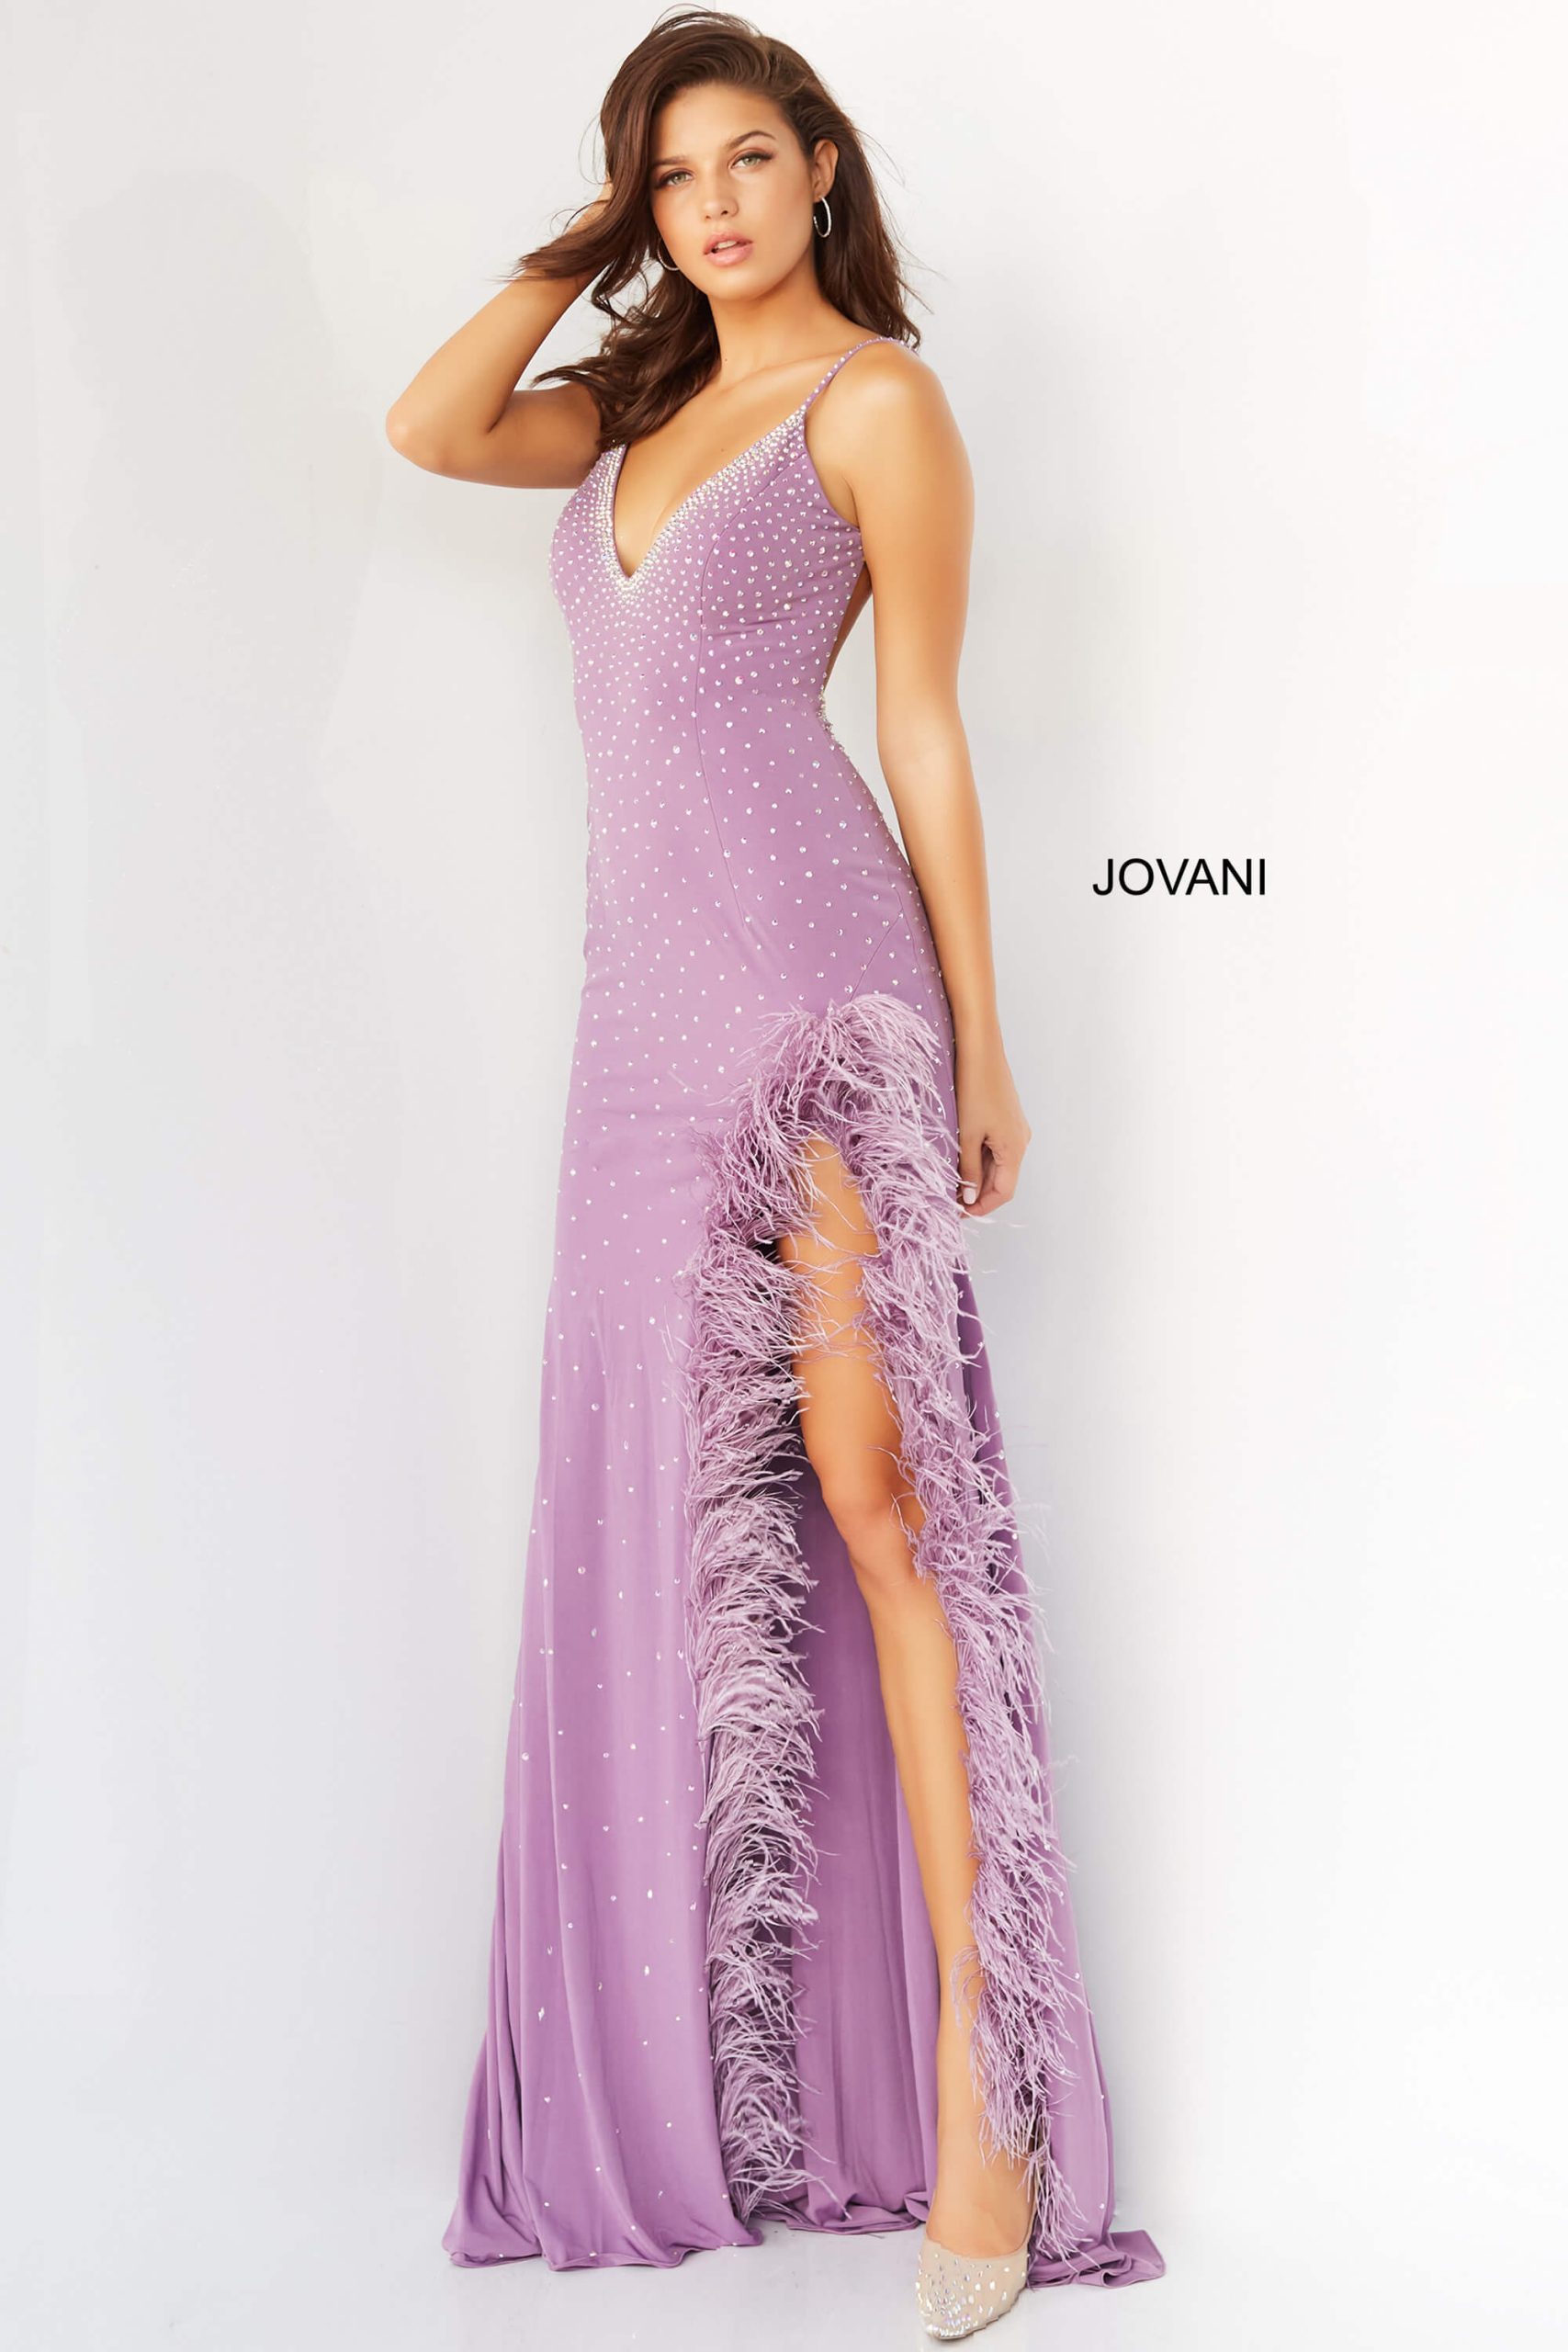 Jovani 08283 Lilac Embellished Low Back Party Dress